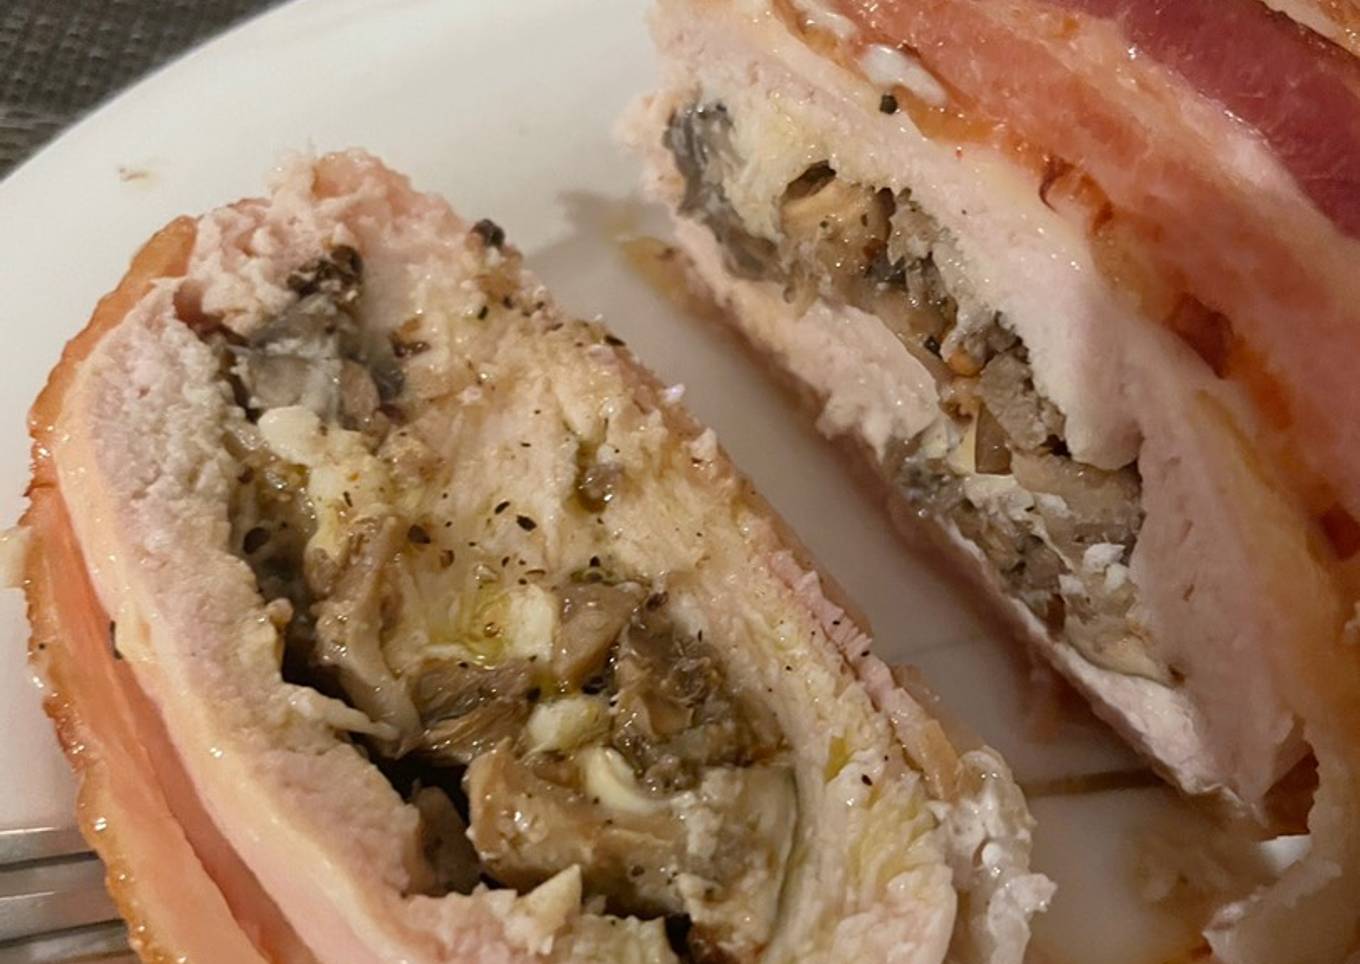 Han’s stuffed chicken with duxelles (mushroom)